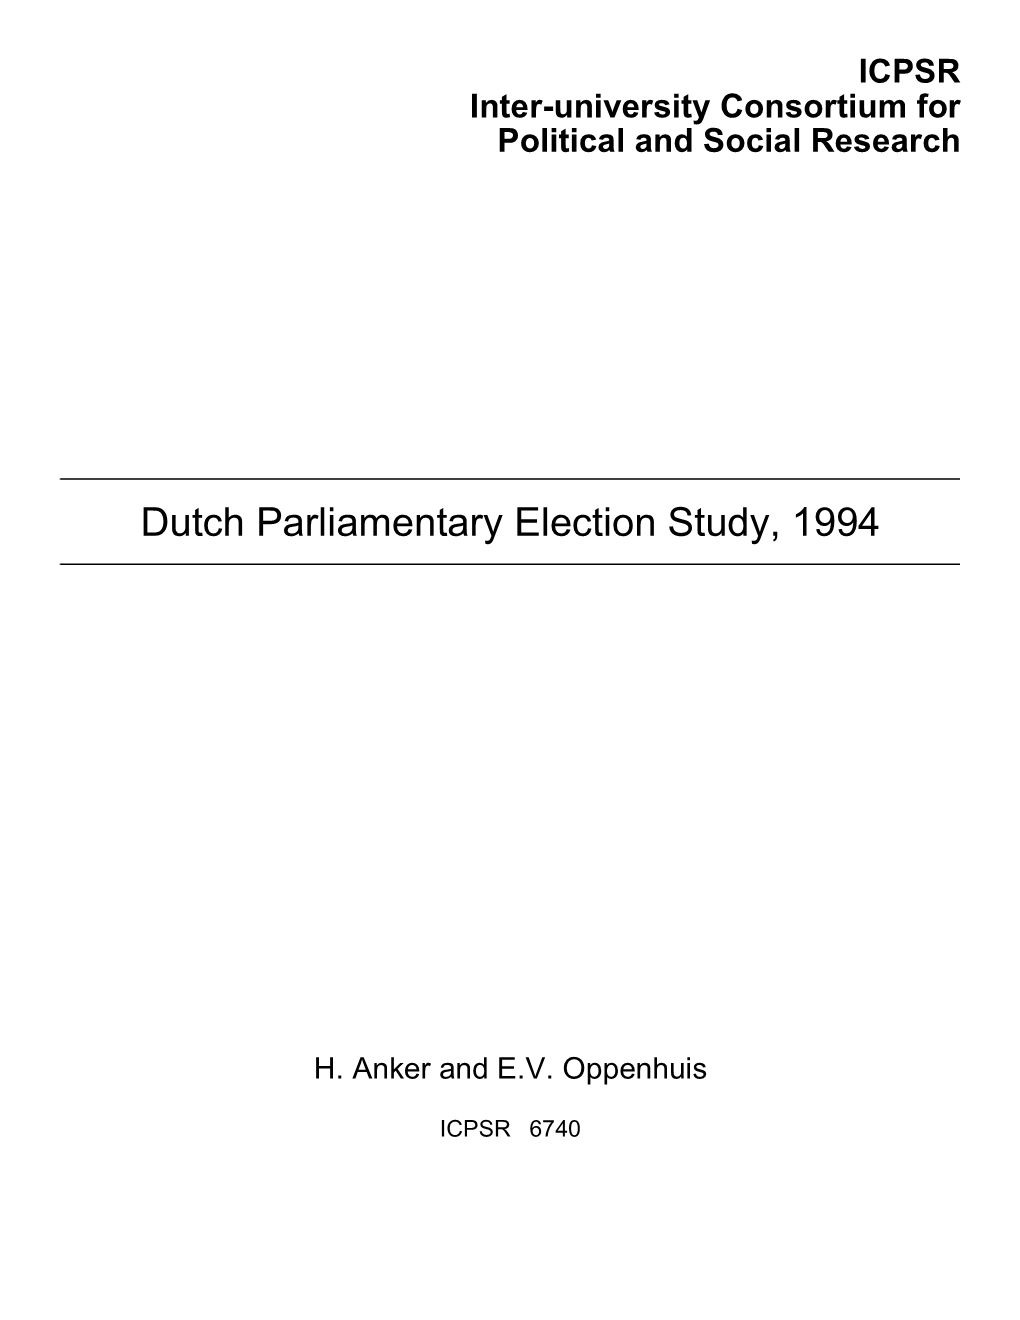 Dutch Parliamentary Election Study, 1994